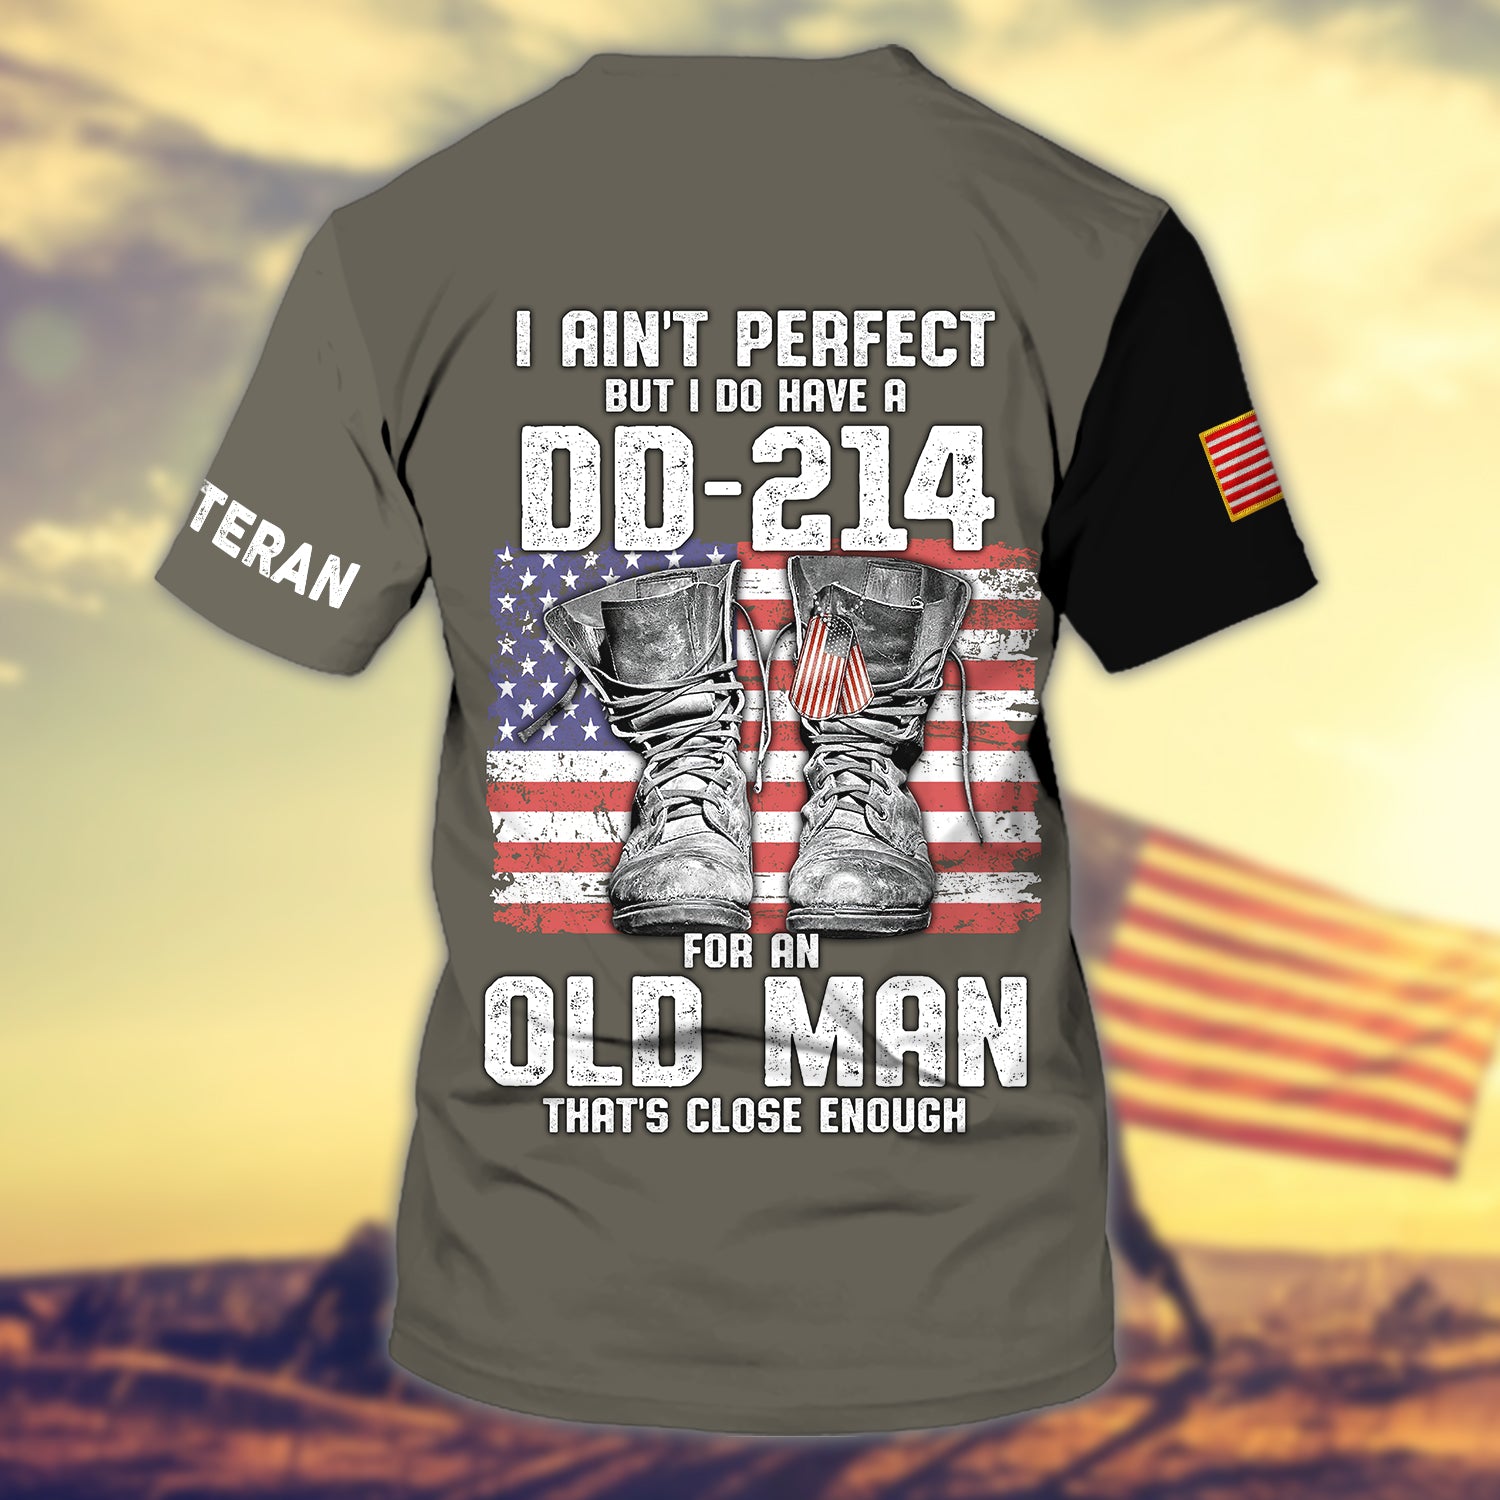 U.S Veteran - DD214 - Personalized Name 3D Tshirt 11 - Nvc97